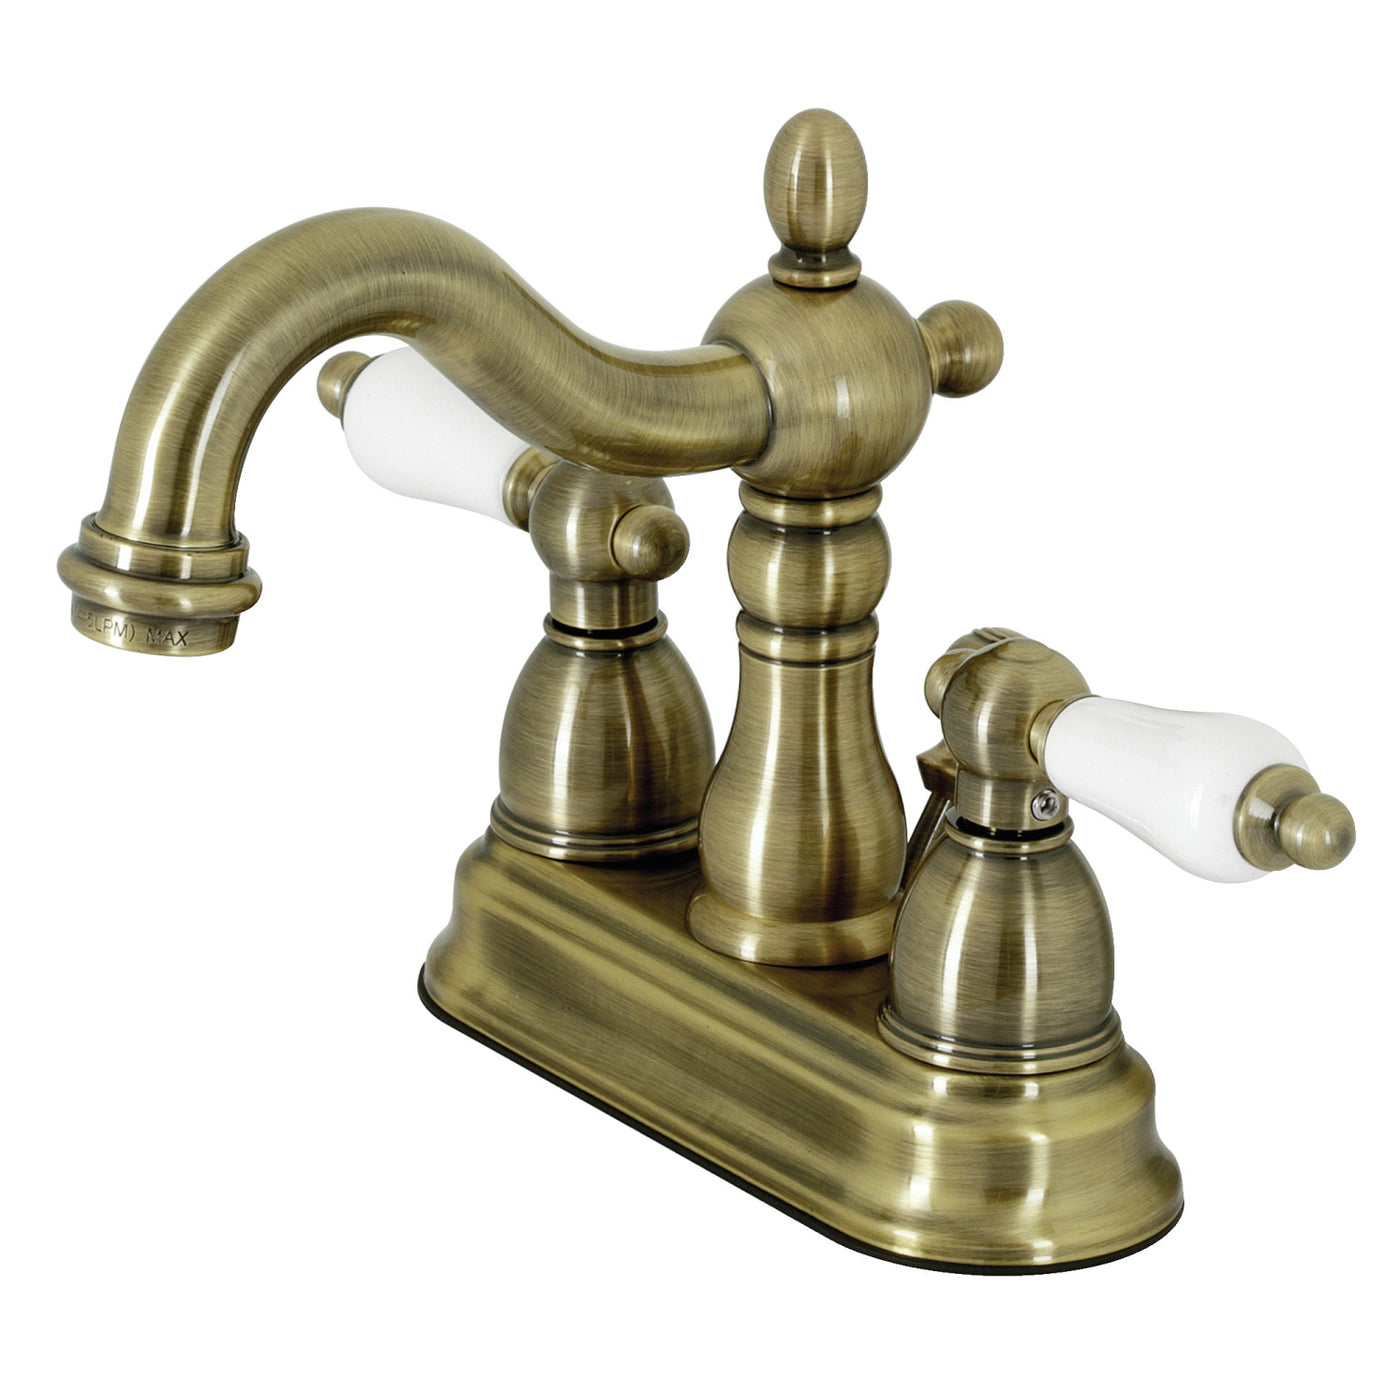 Elements of Design EB1603PL 4-Inch Centerset Bathroom Faucet with Plastic Pop-Up, Antique Brass